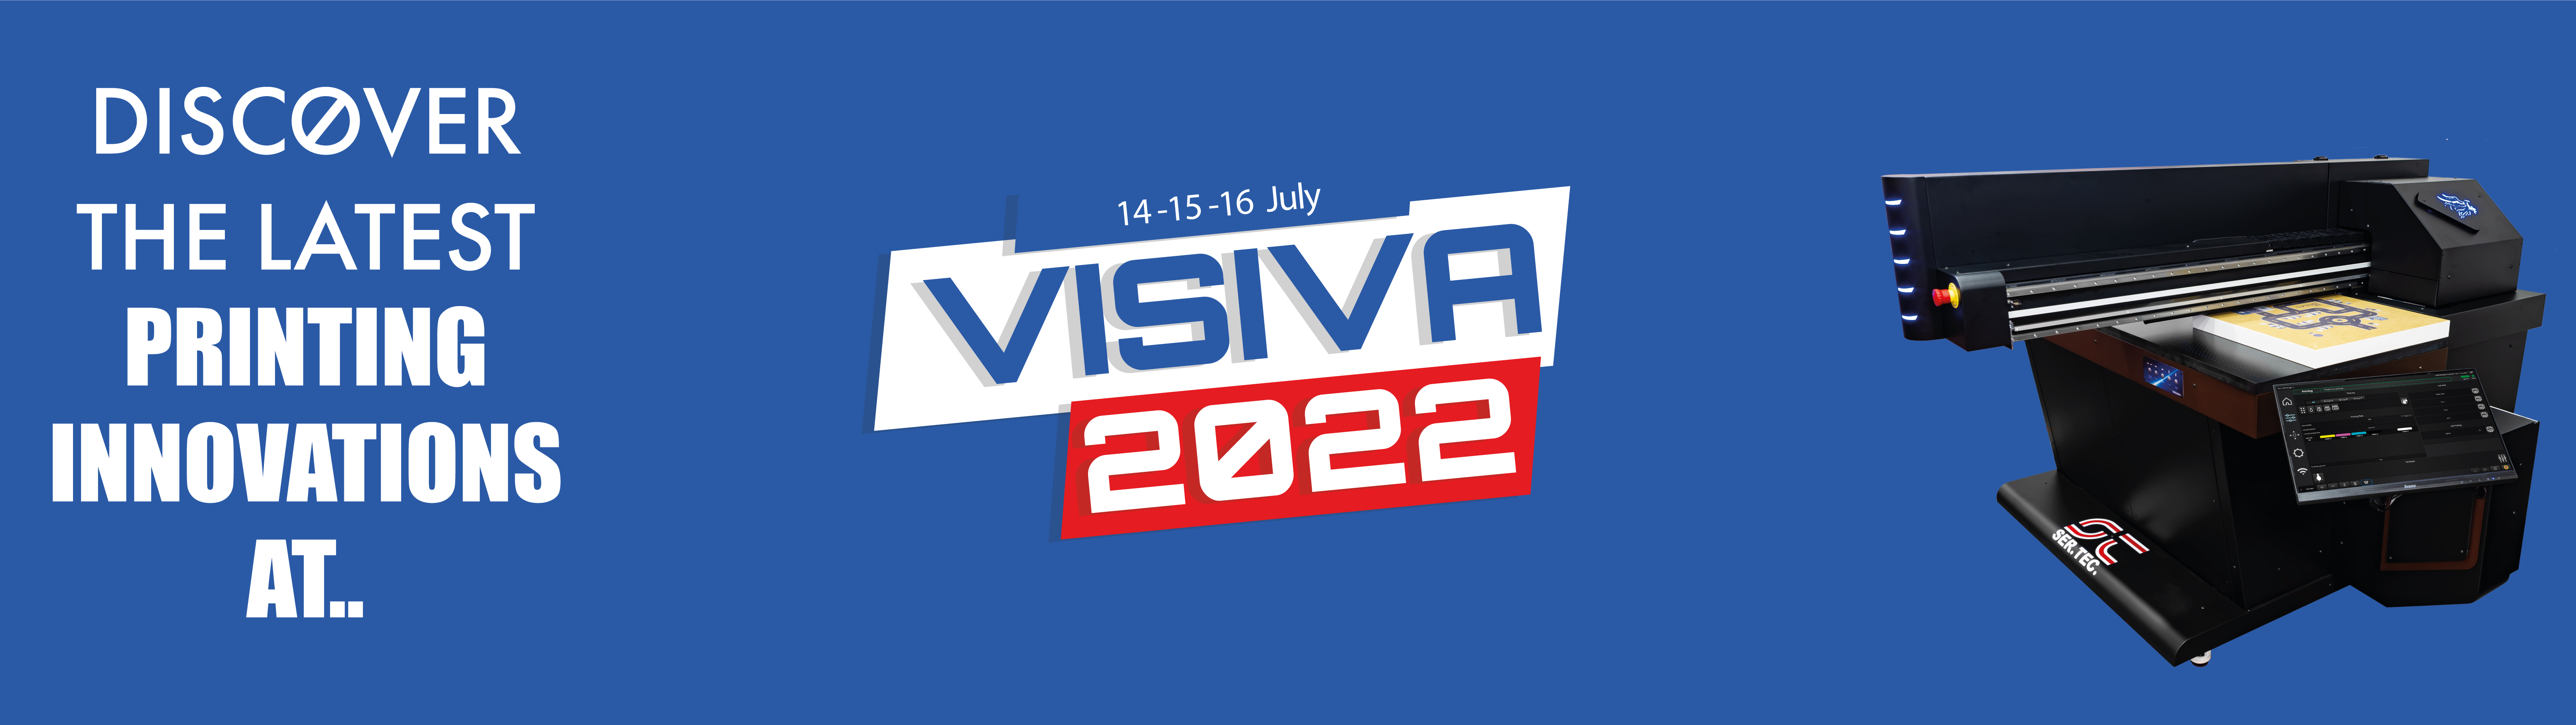 Visiva 2022